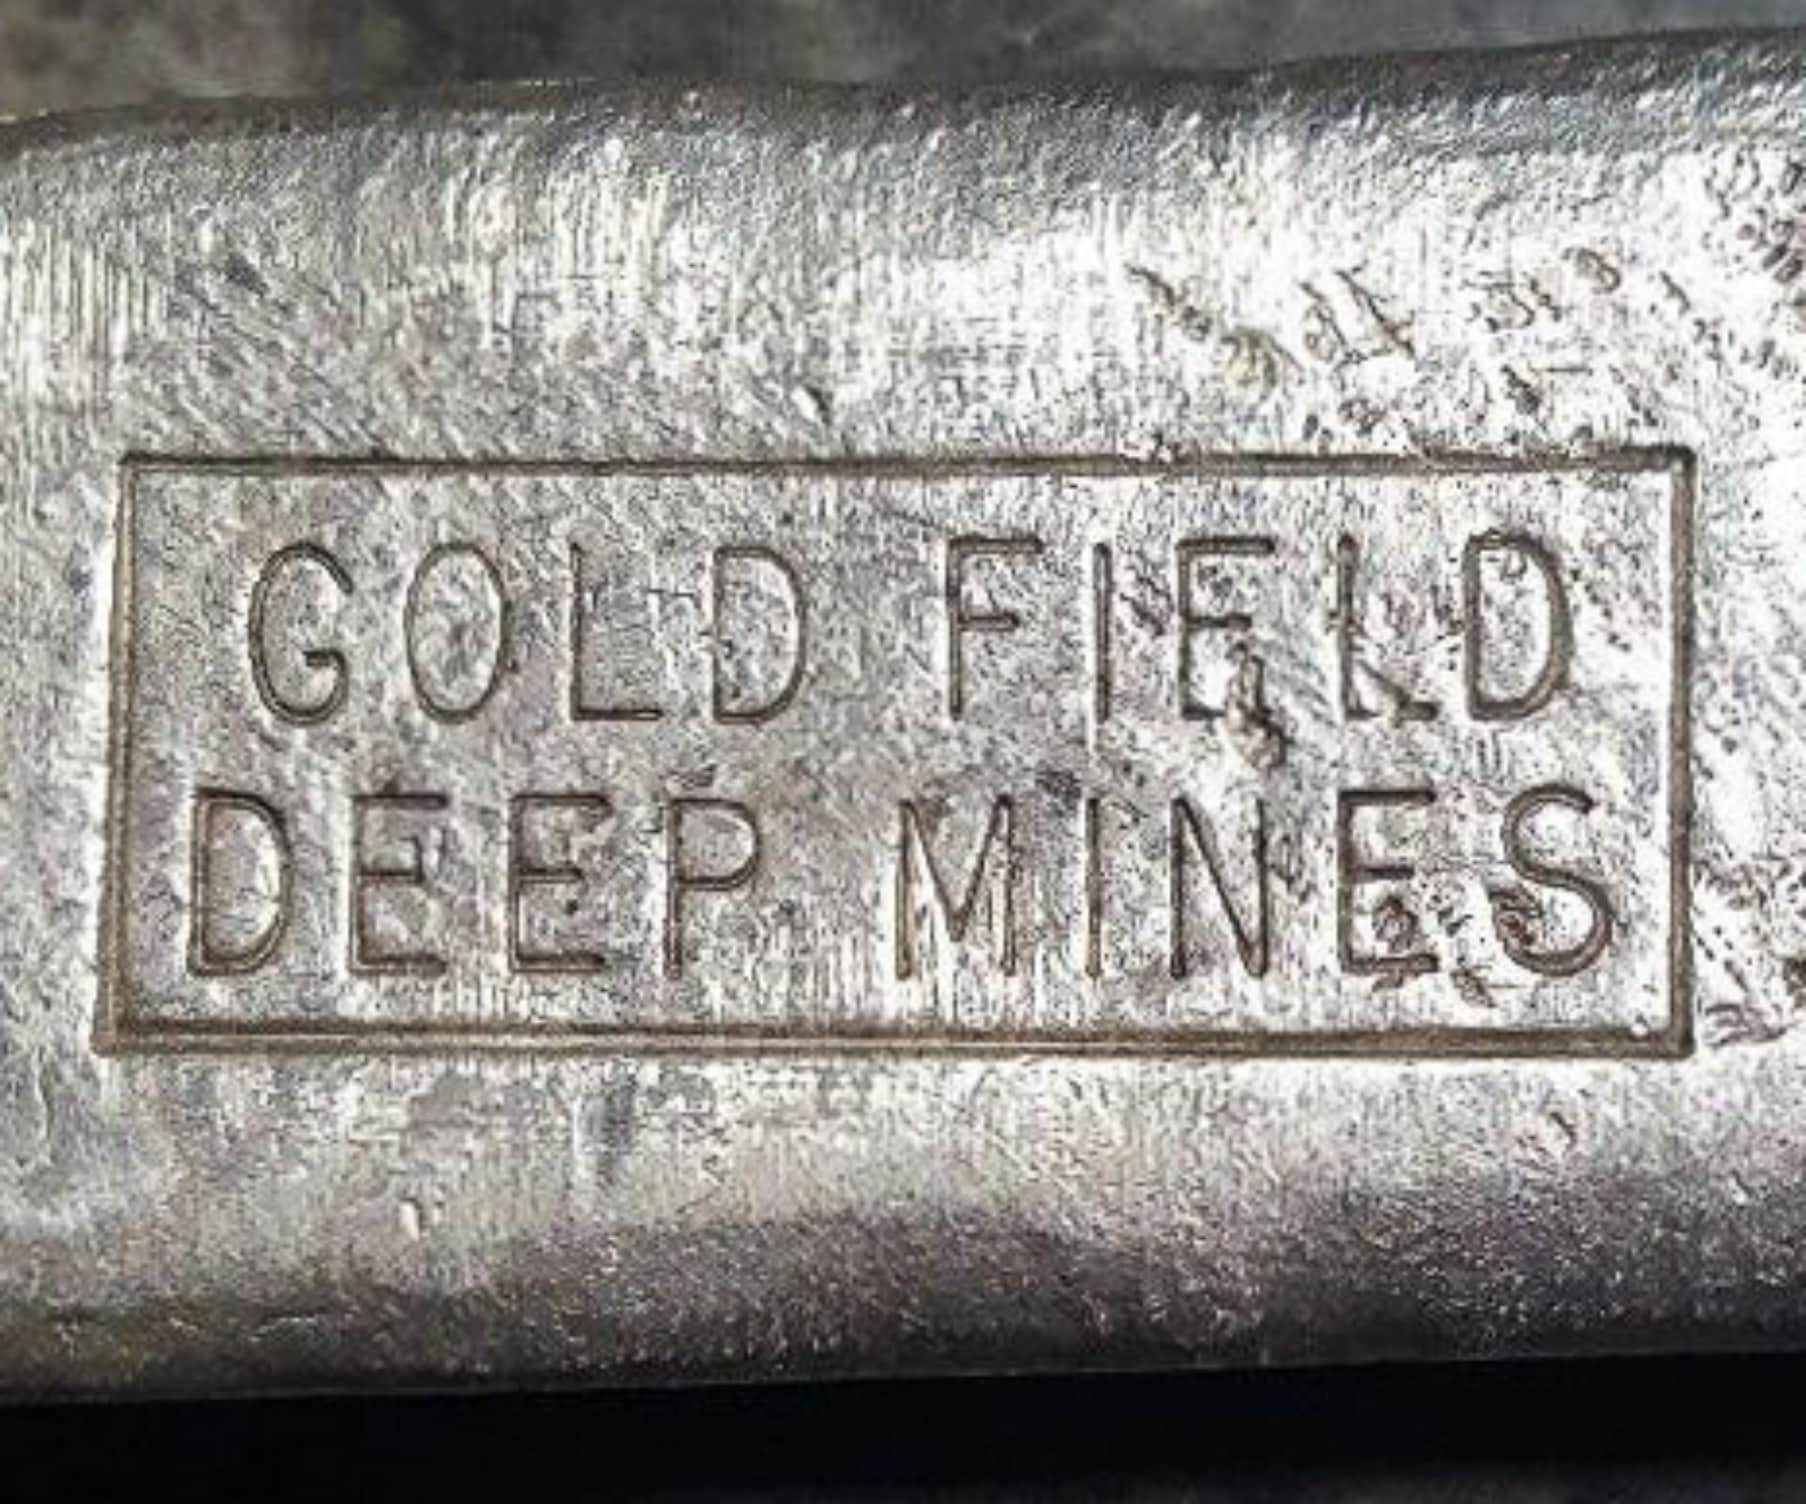 Goldfield Deep mines silver hallmark